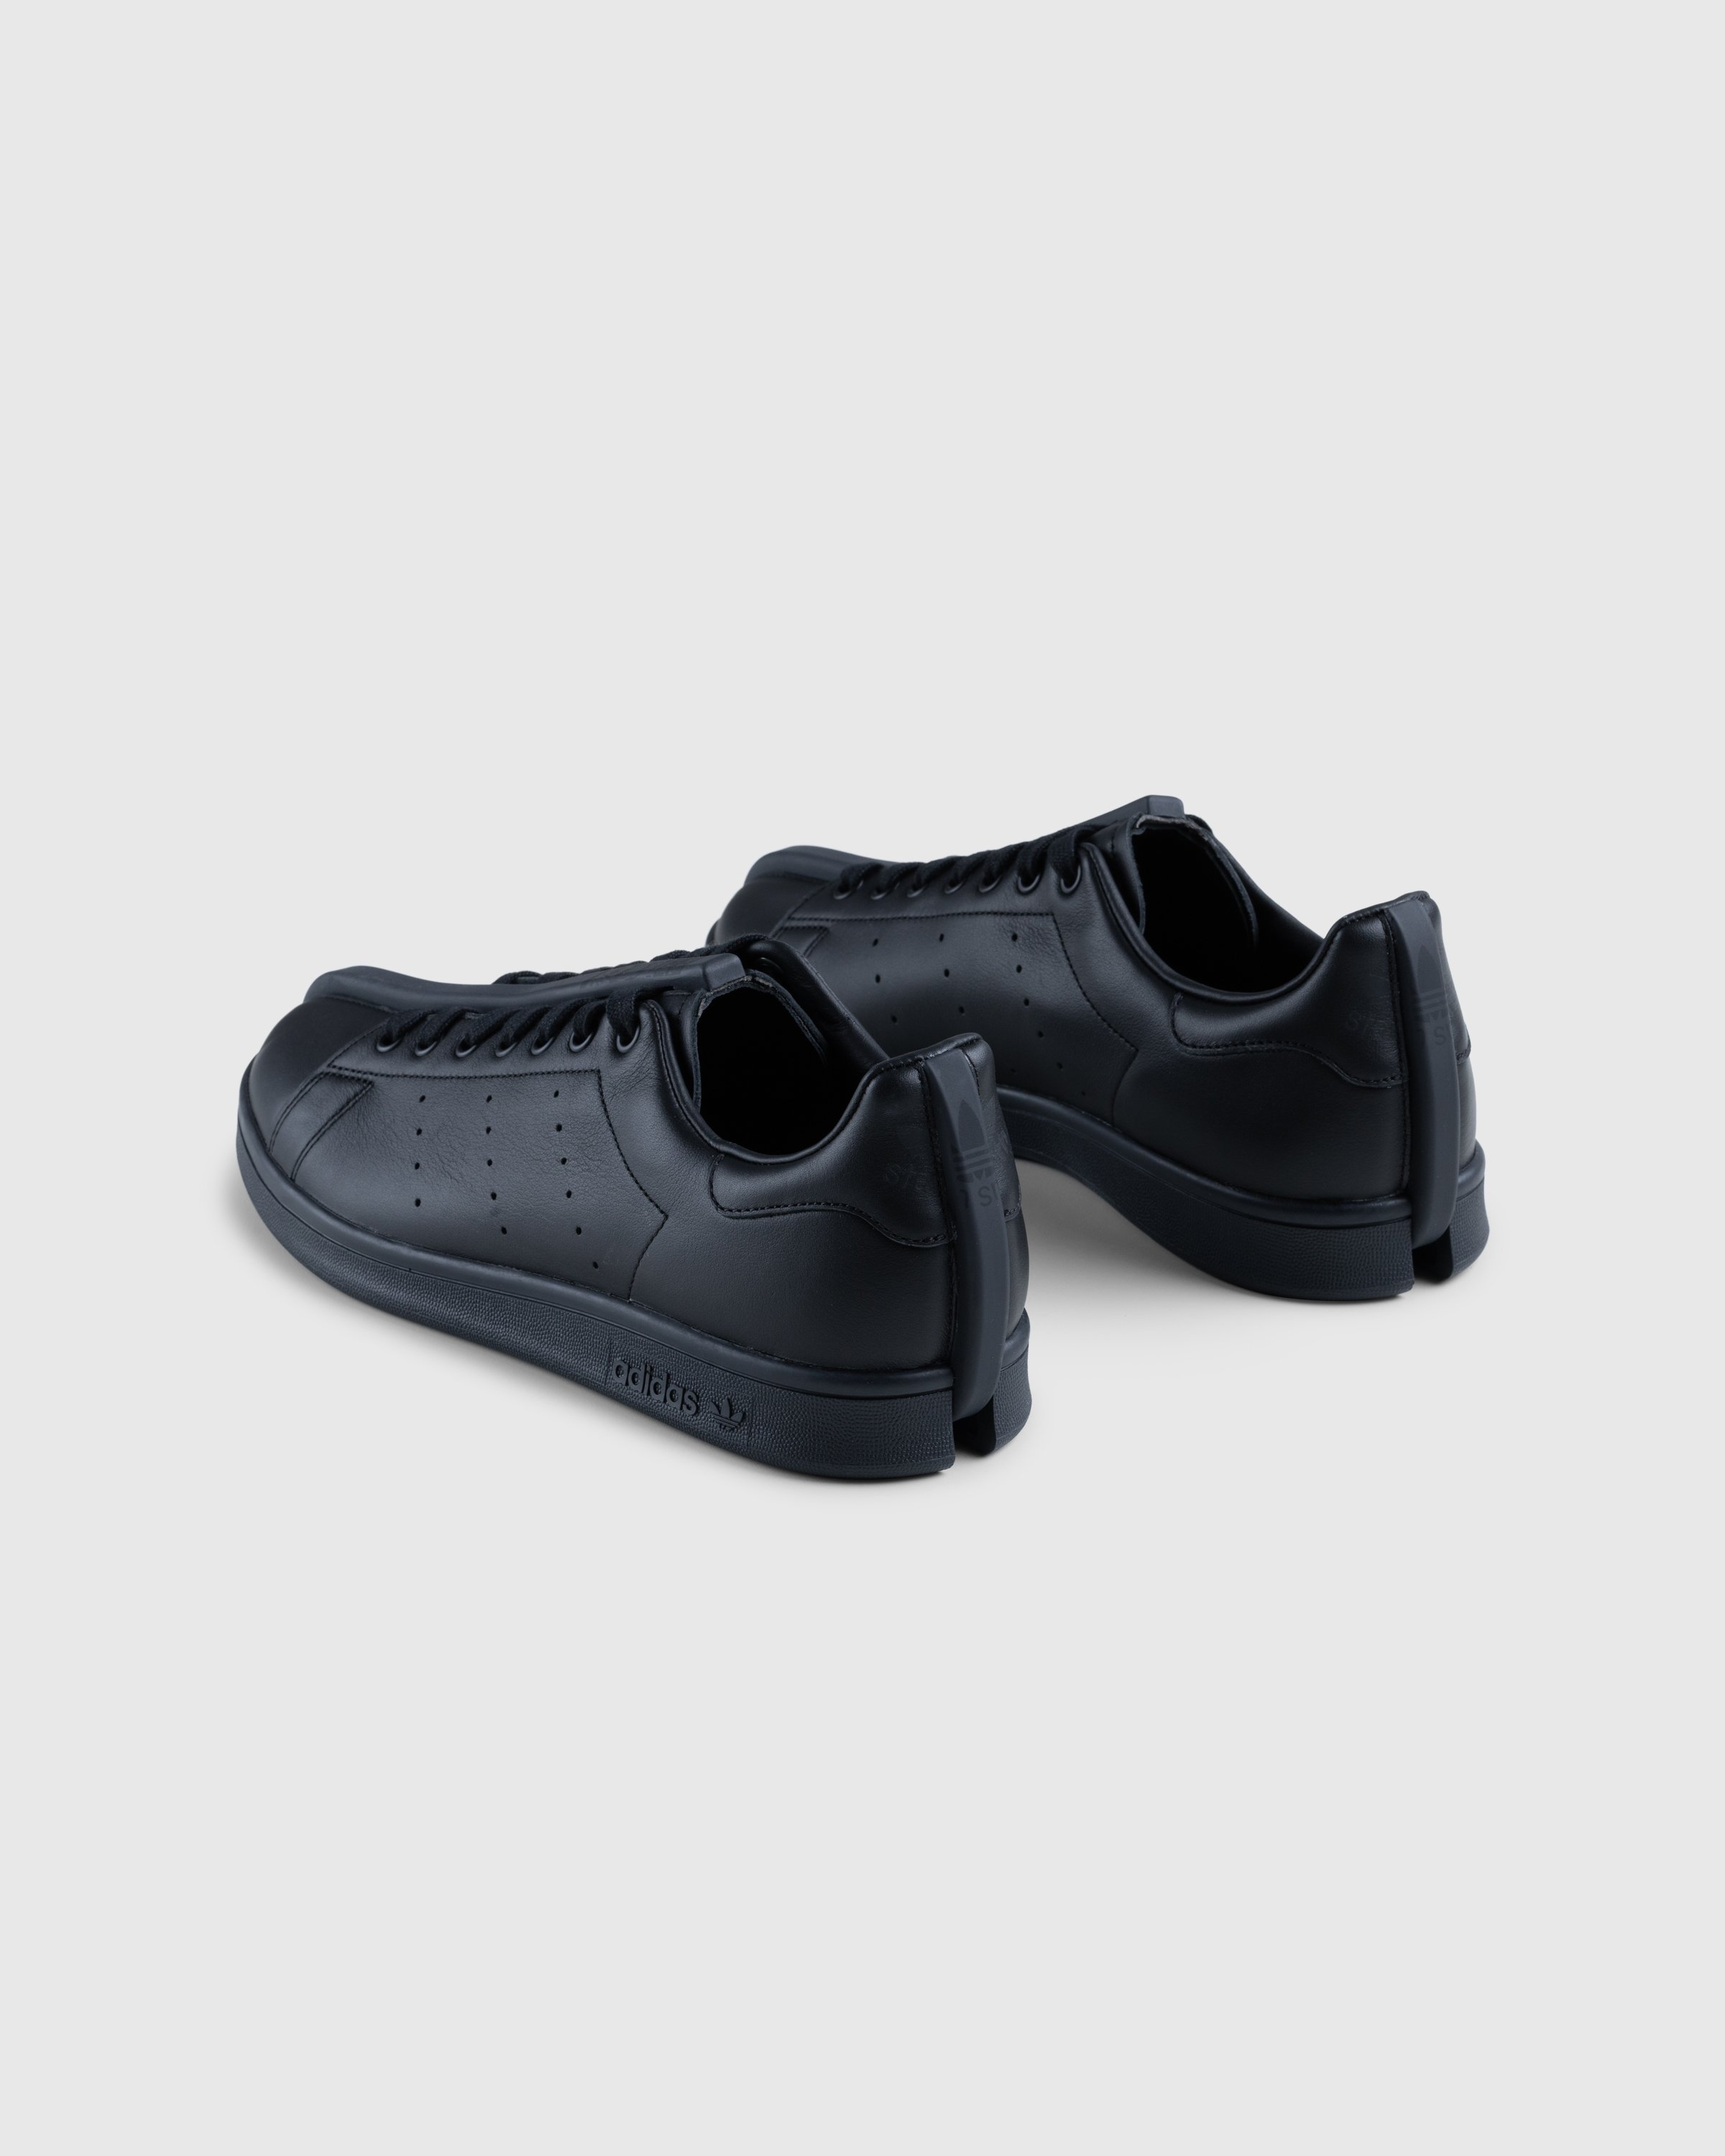 Craig Green x Adidas - CG Split Stan Smith core black/core black/granite - Footwear - Black - Image 4